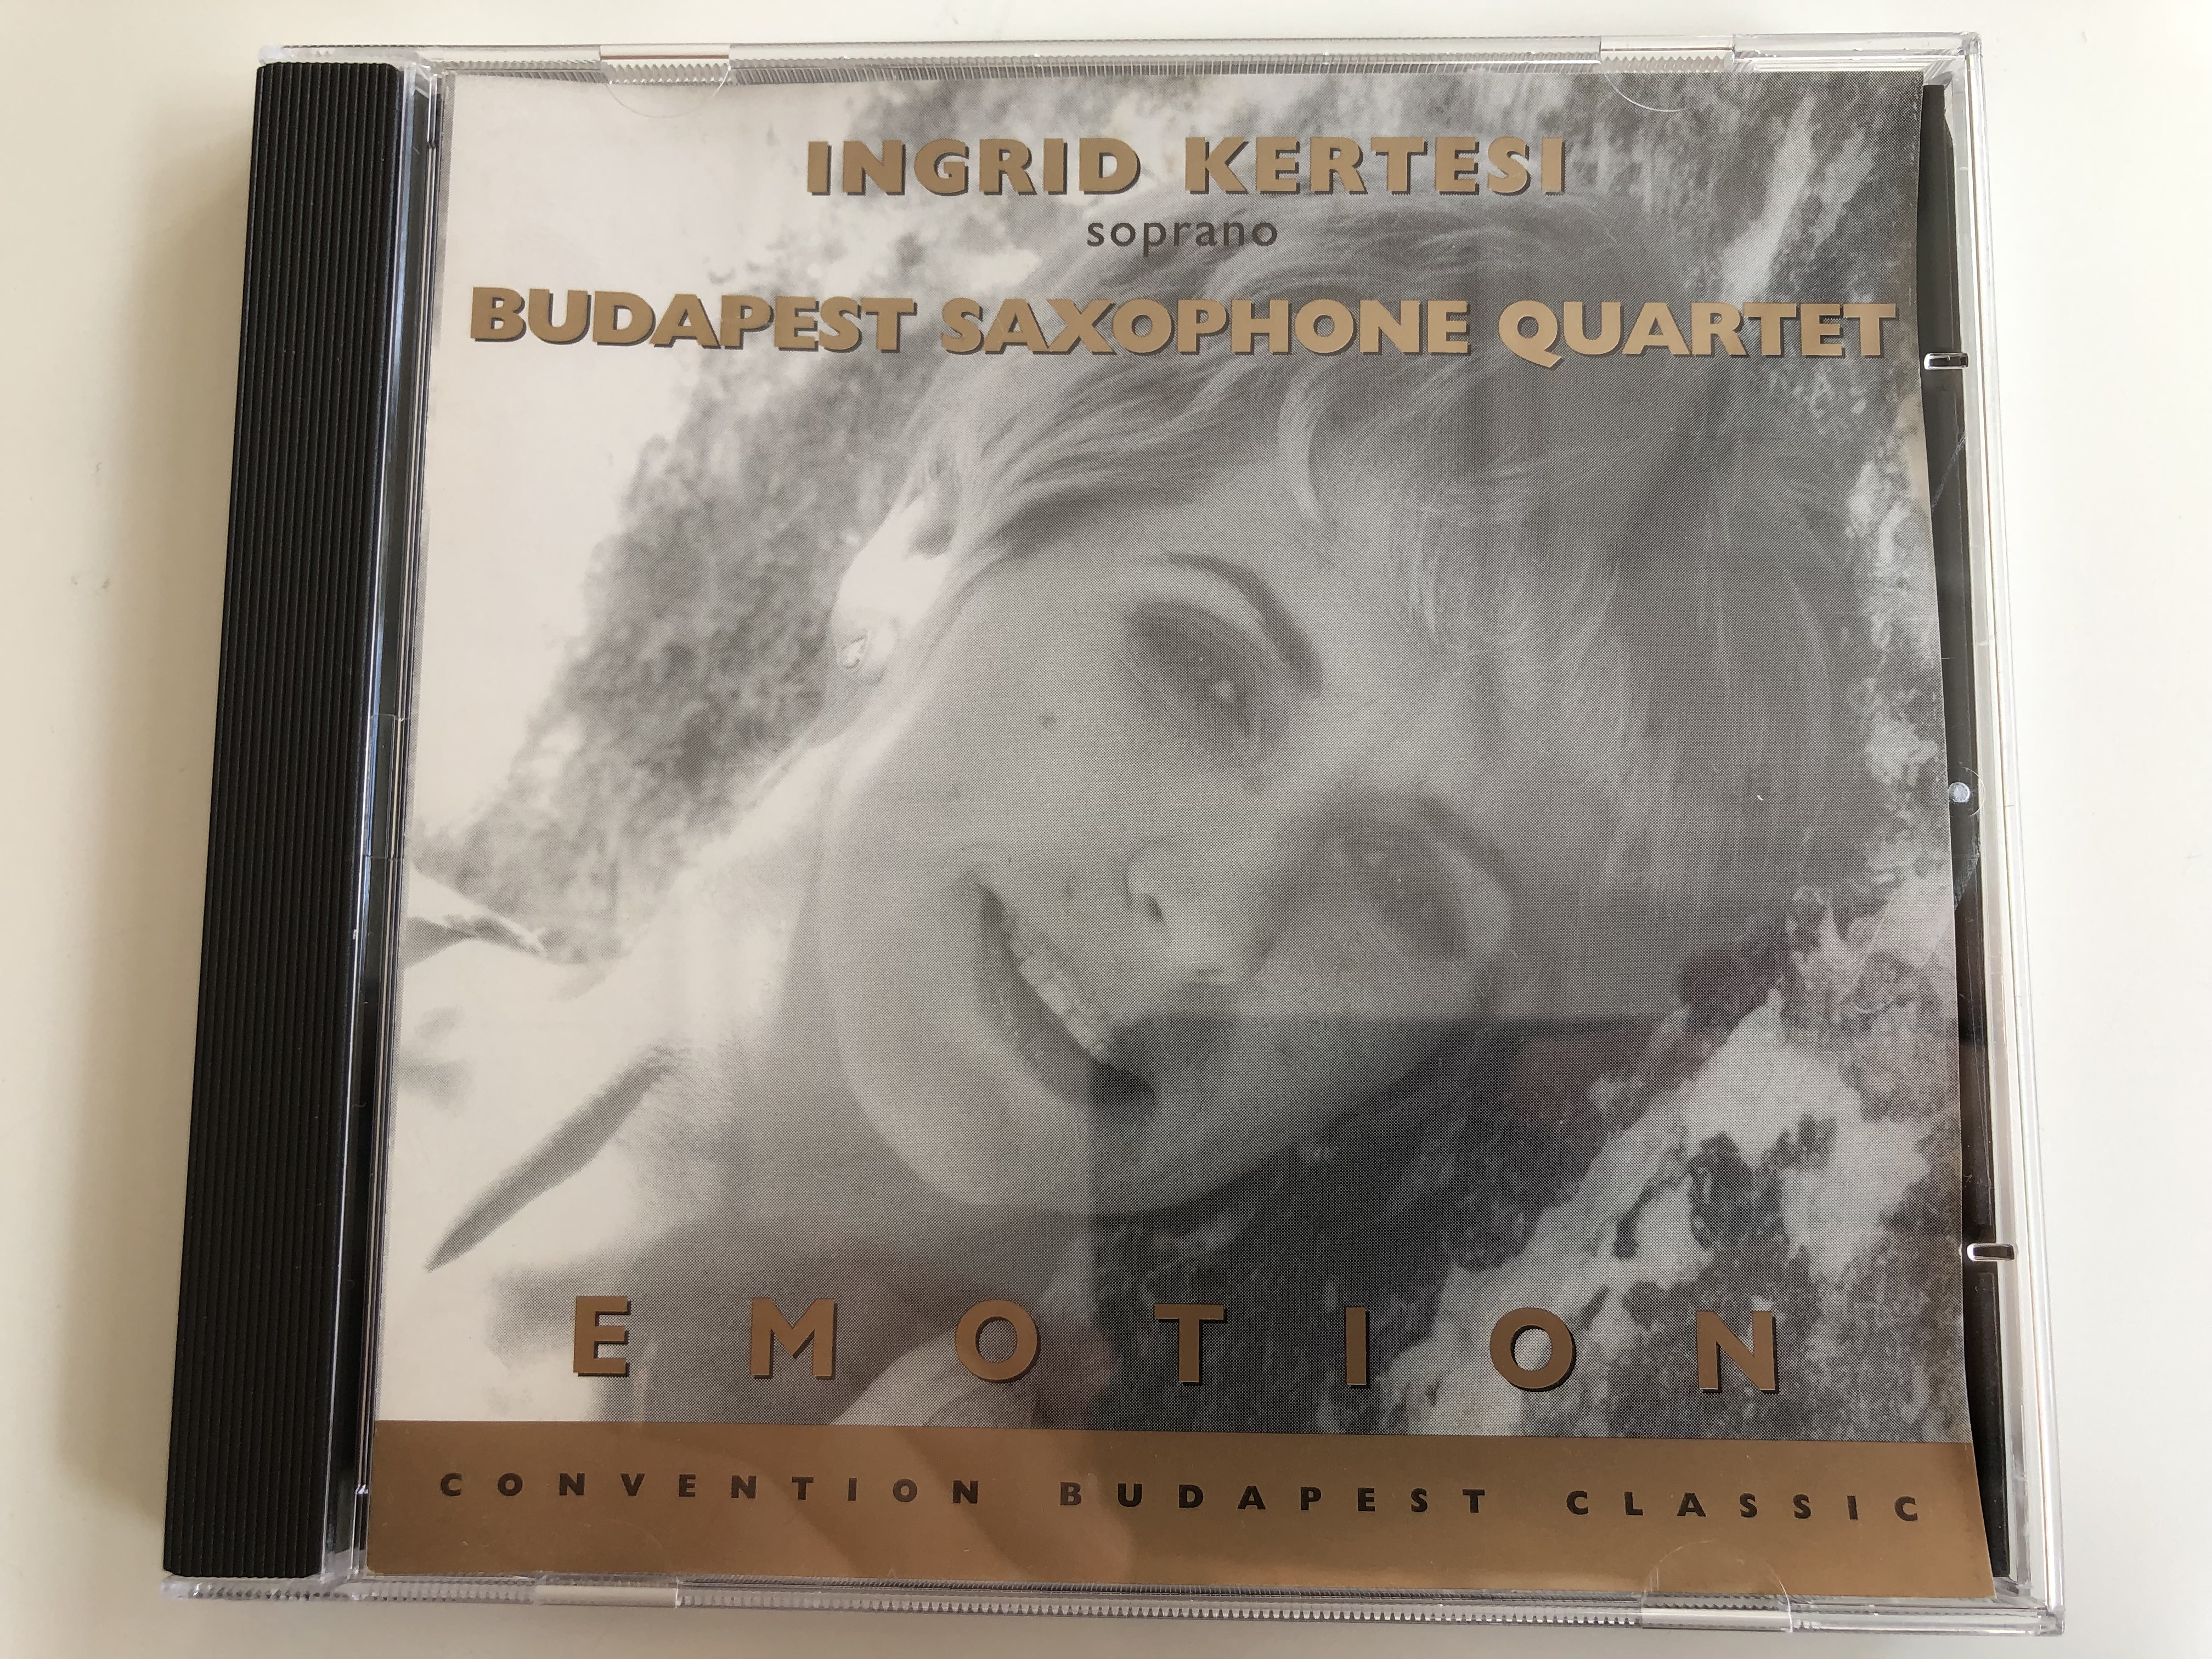 ingrid-kertesi-soprano-budapest-saxophone-quartet-emotion-convention-budapest-classics-audio-cd-2002-cbp-013-1-.jpg